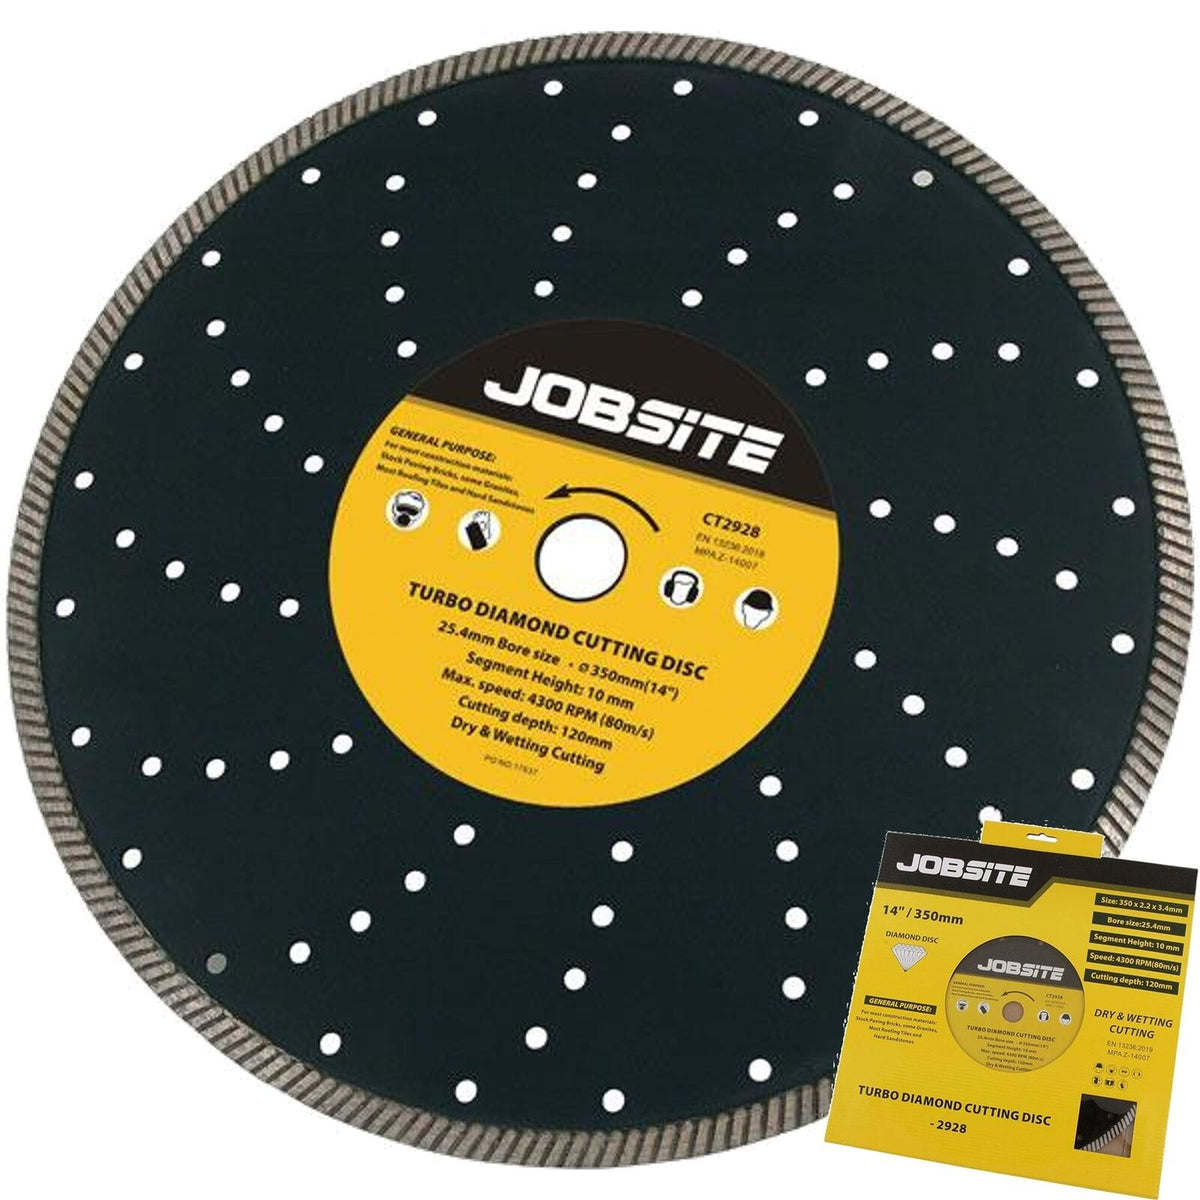 Jobsite Dry & Wetting Diamond Cutting Blade Disc Brick Grinder 350mm 14"